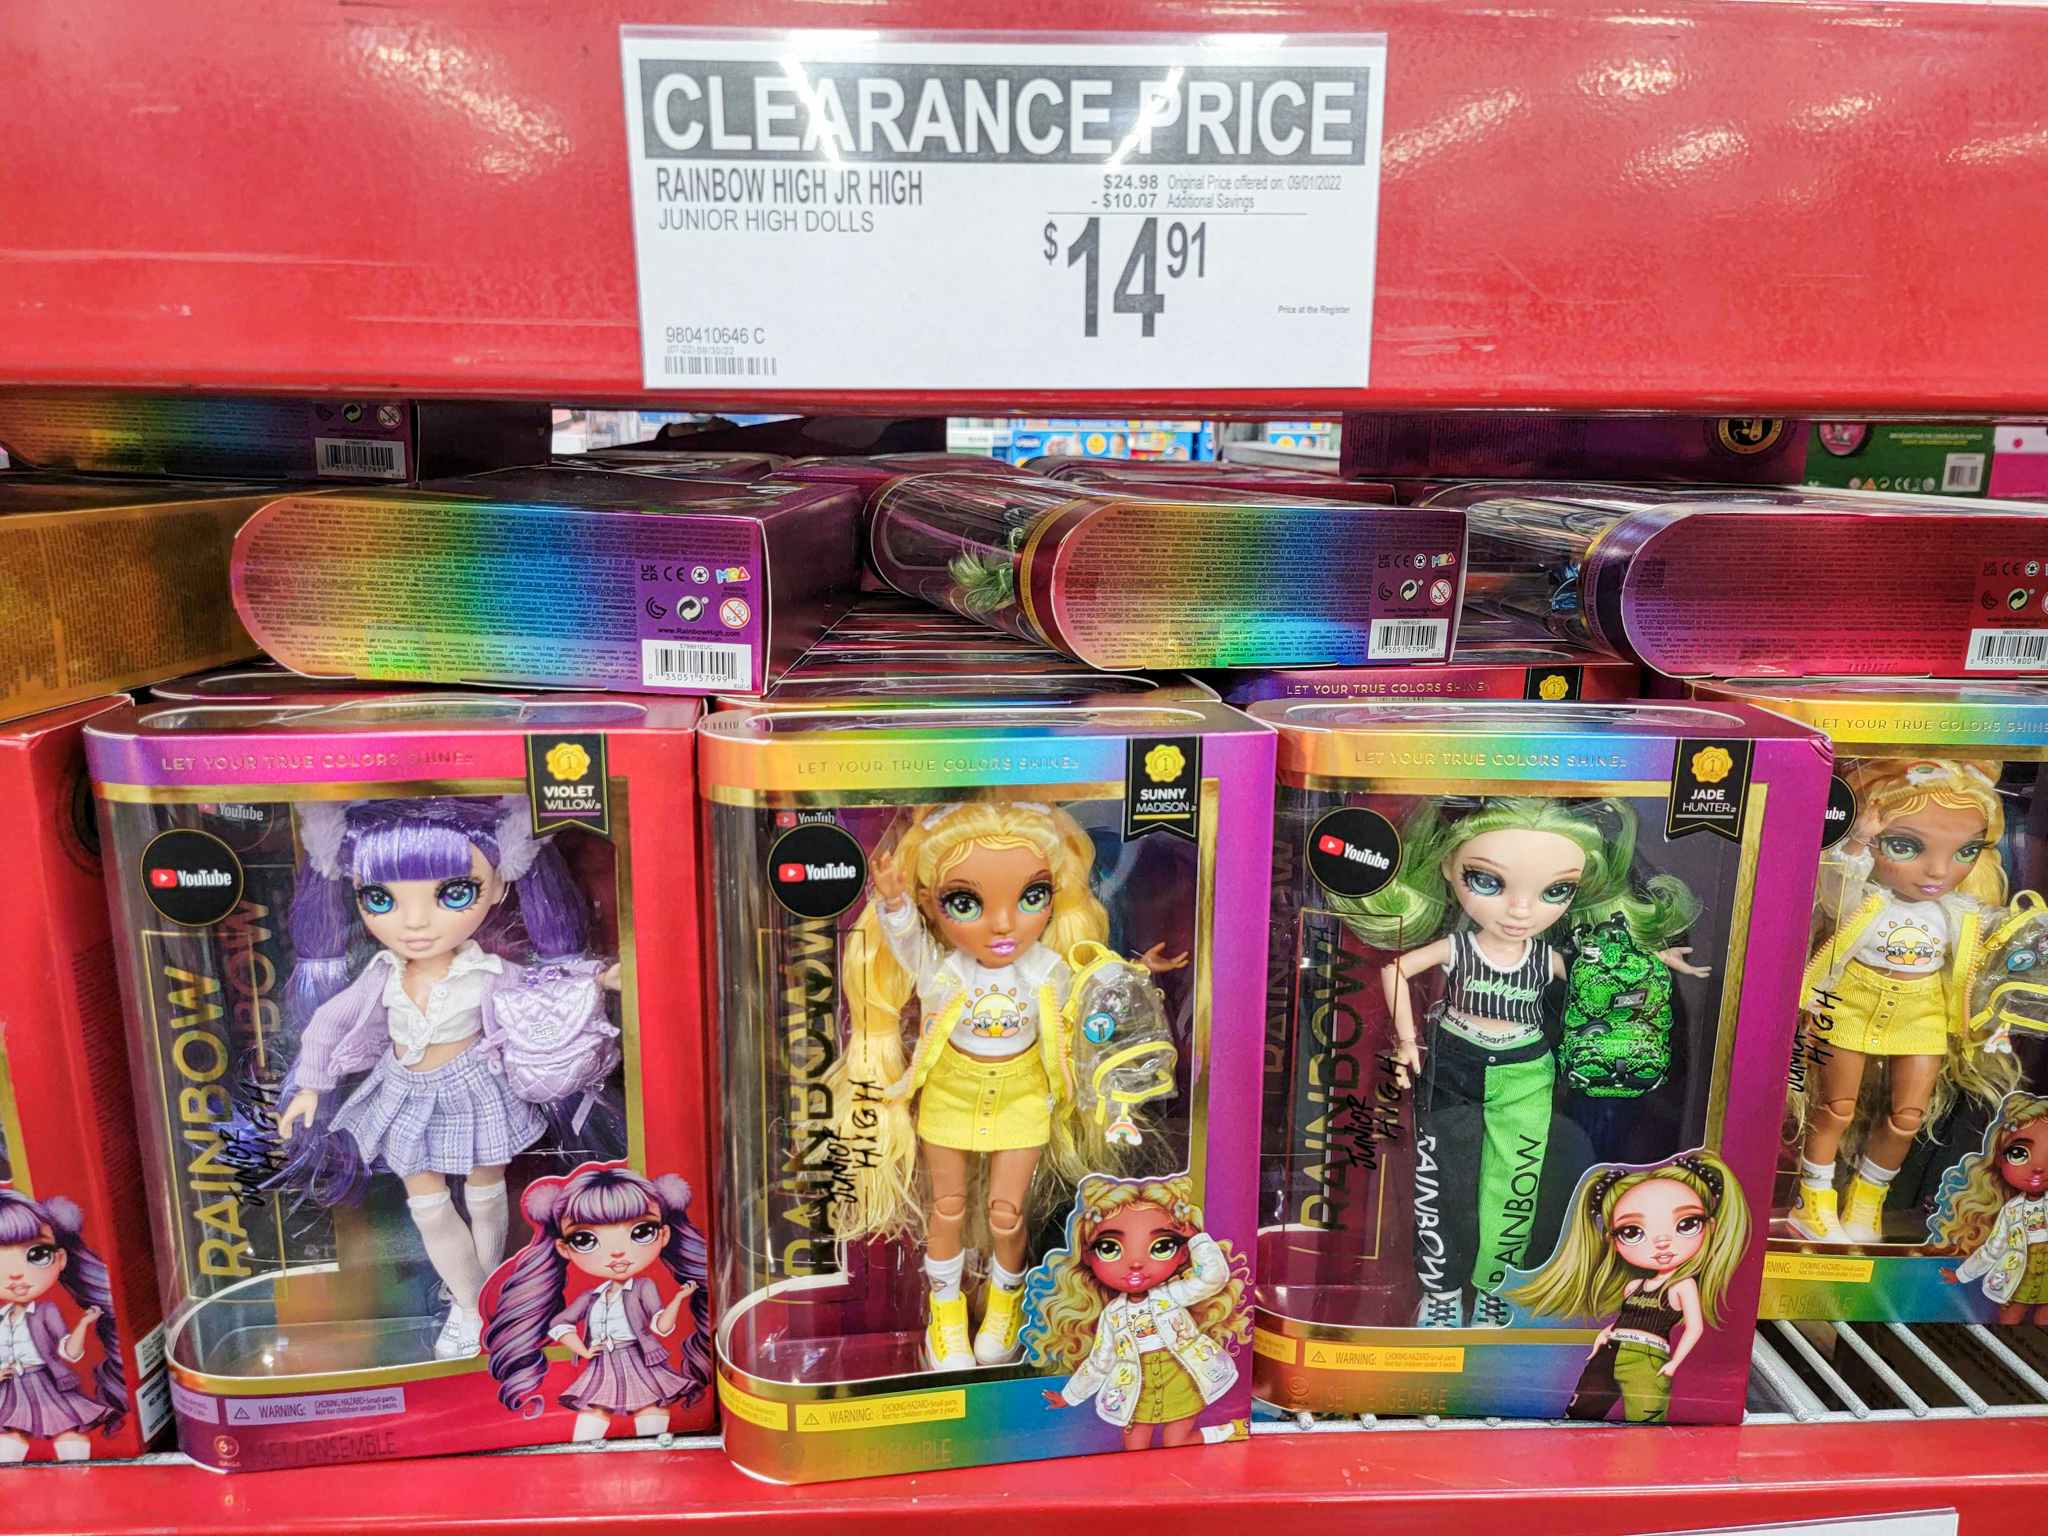 rainbow high dolls with clearance tag for 14.91